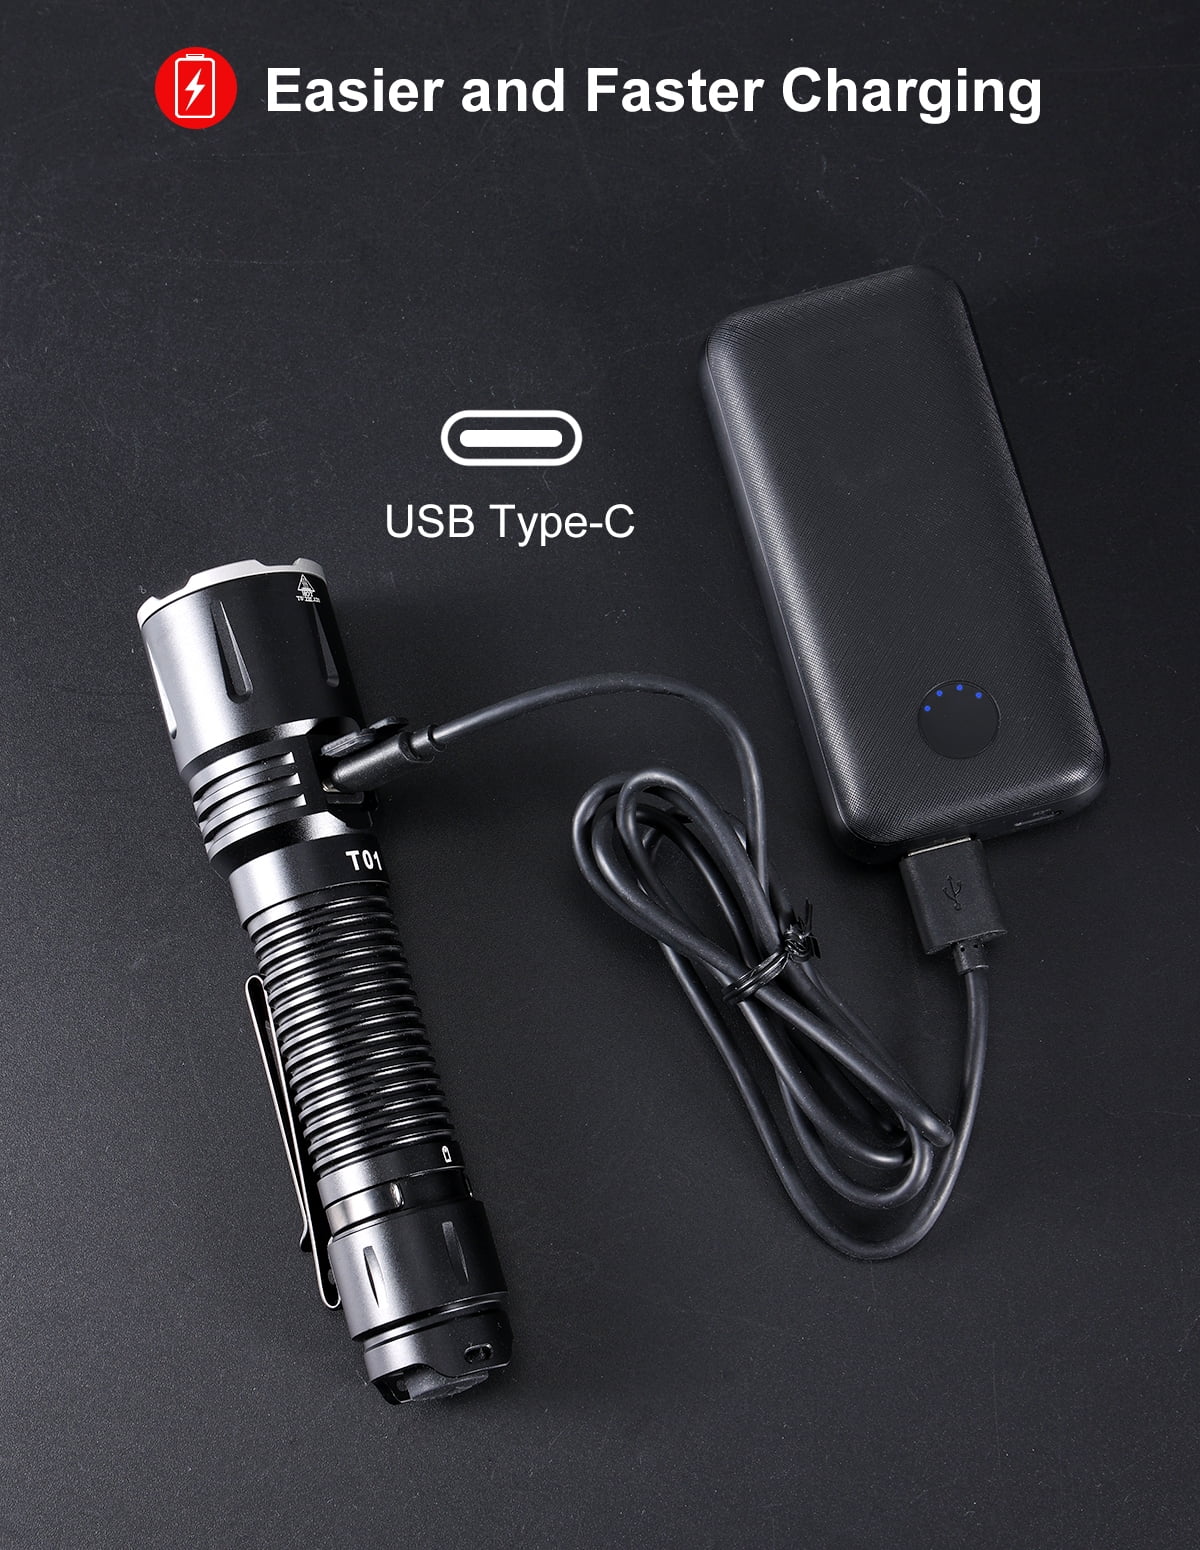 APLOS T01 3100 Lumens Tactical Flashlight, USB-C Rechargeable LED Flashlight  for Emergencies, EDC, Searching